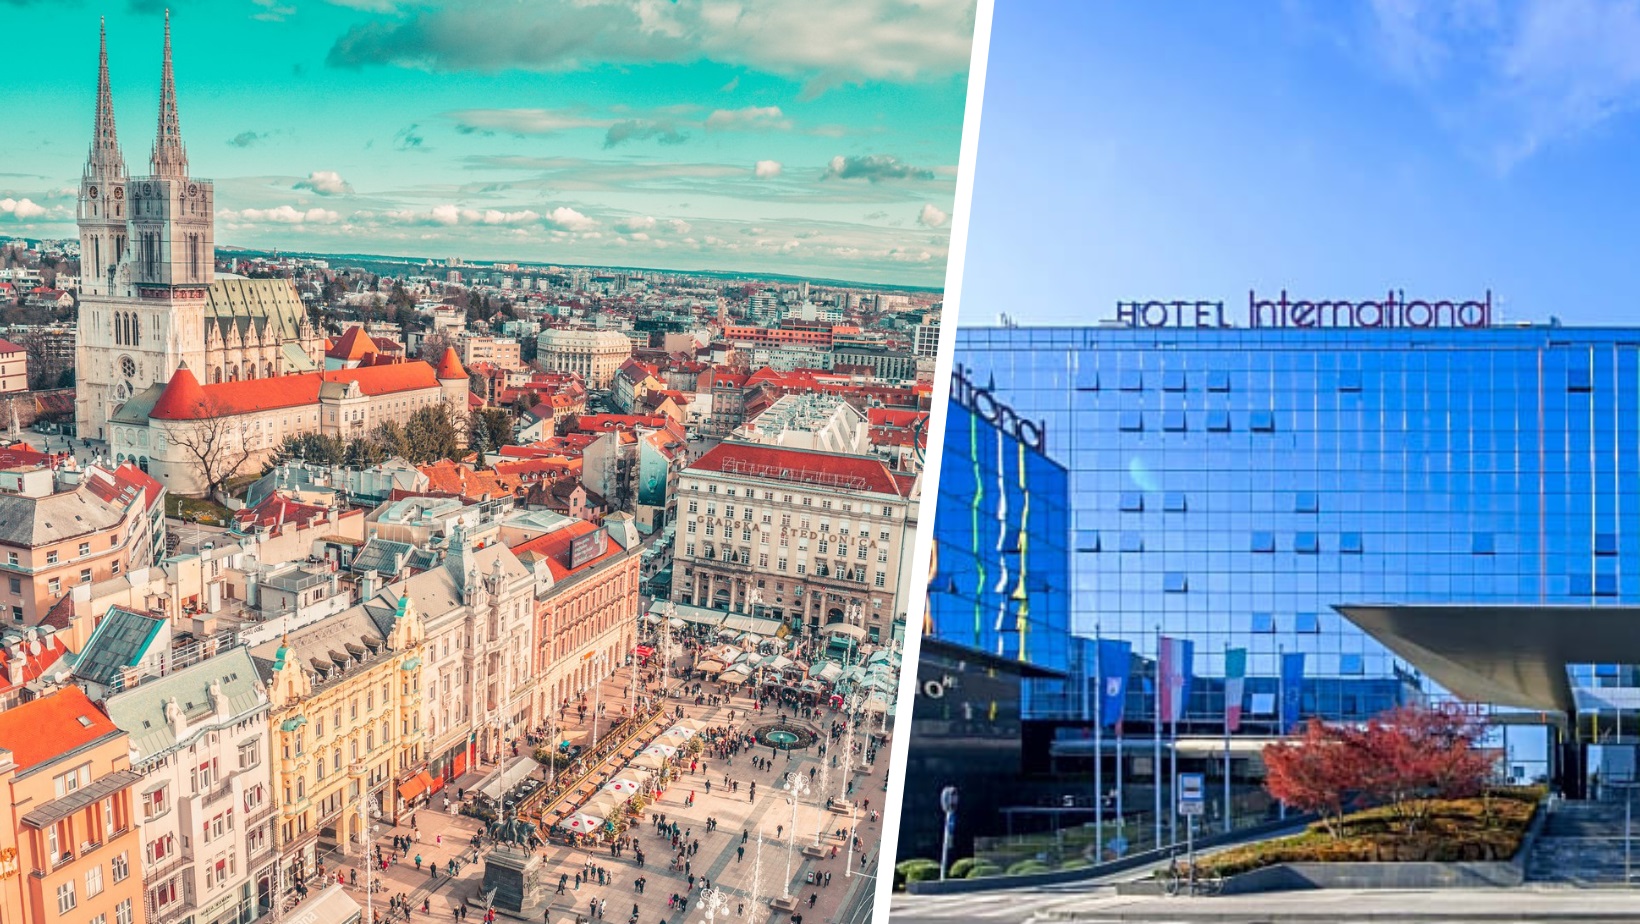 Zagreb will host the 183rd EAAE Seminar on Experimental Economics in September, 2022